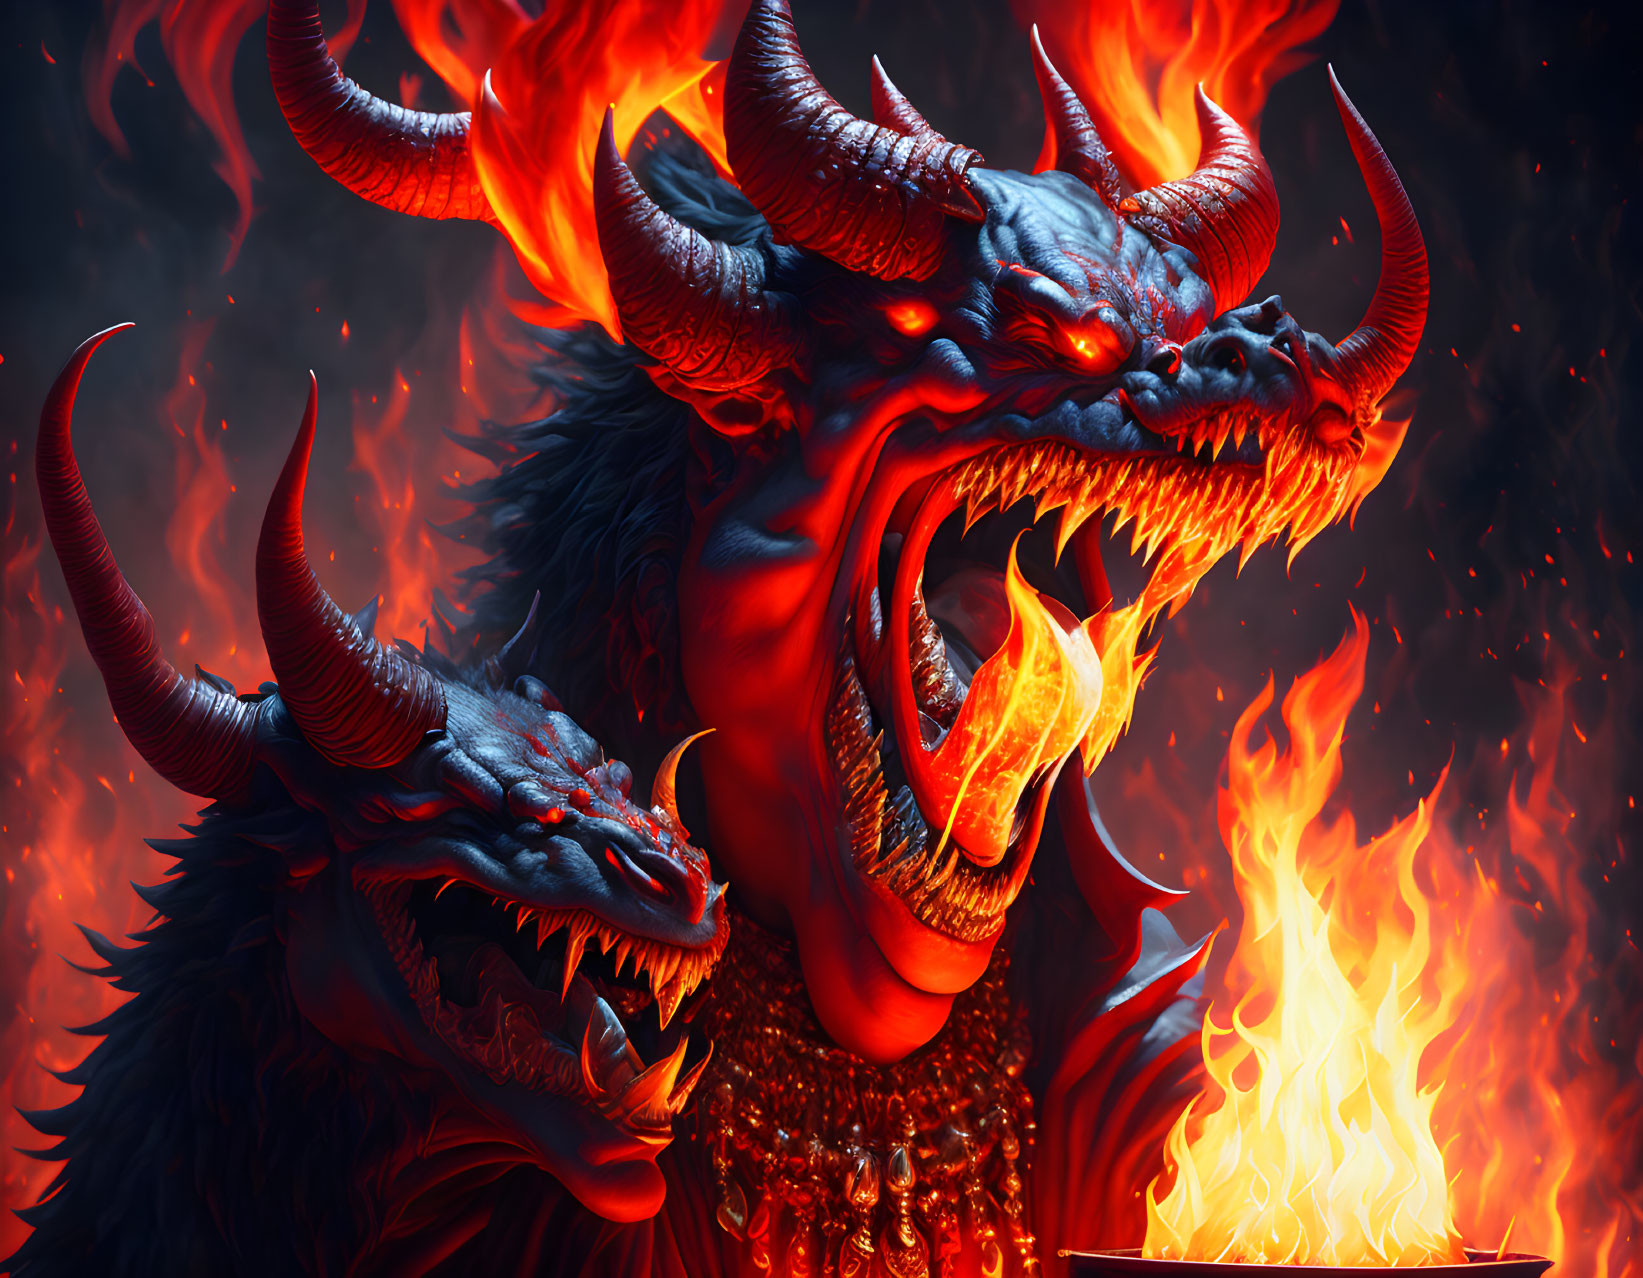 Glowing-eyed dragons breathing fire in dramatic fantasy scene